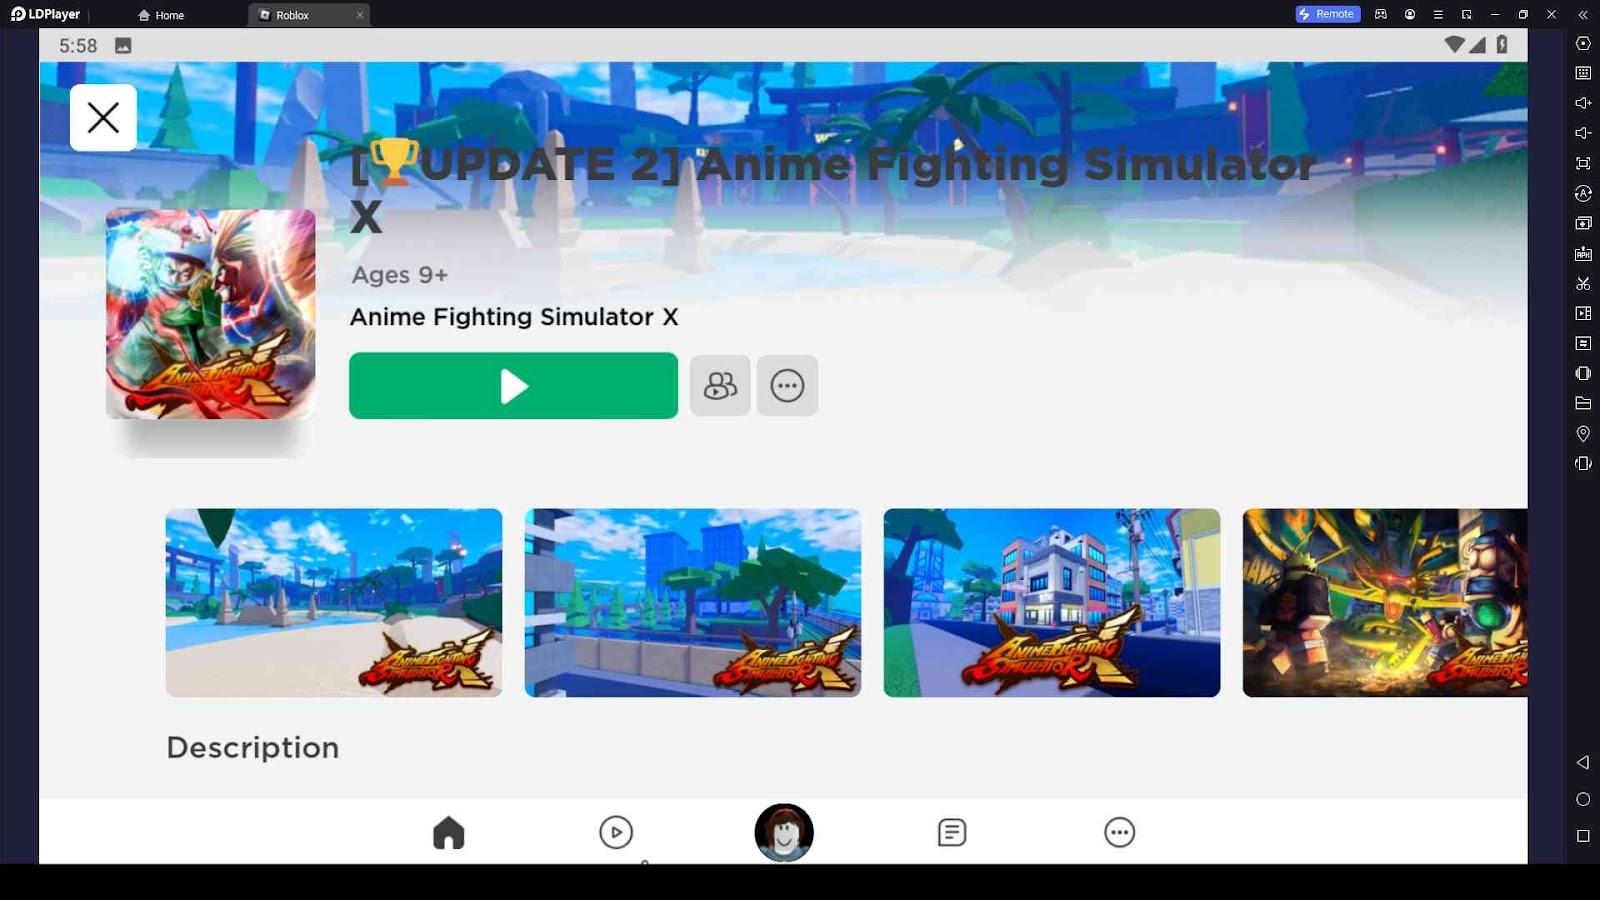 Roblox Anime Fighting Simulator codes (October 2022): Free Chikara shards,  Yen, and much more